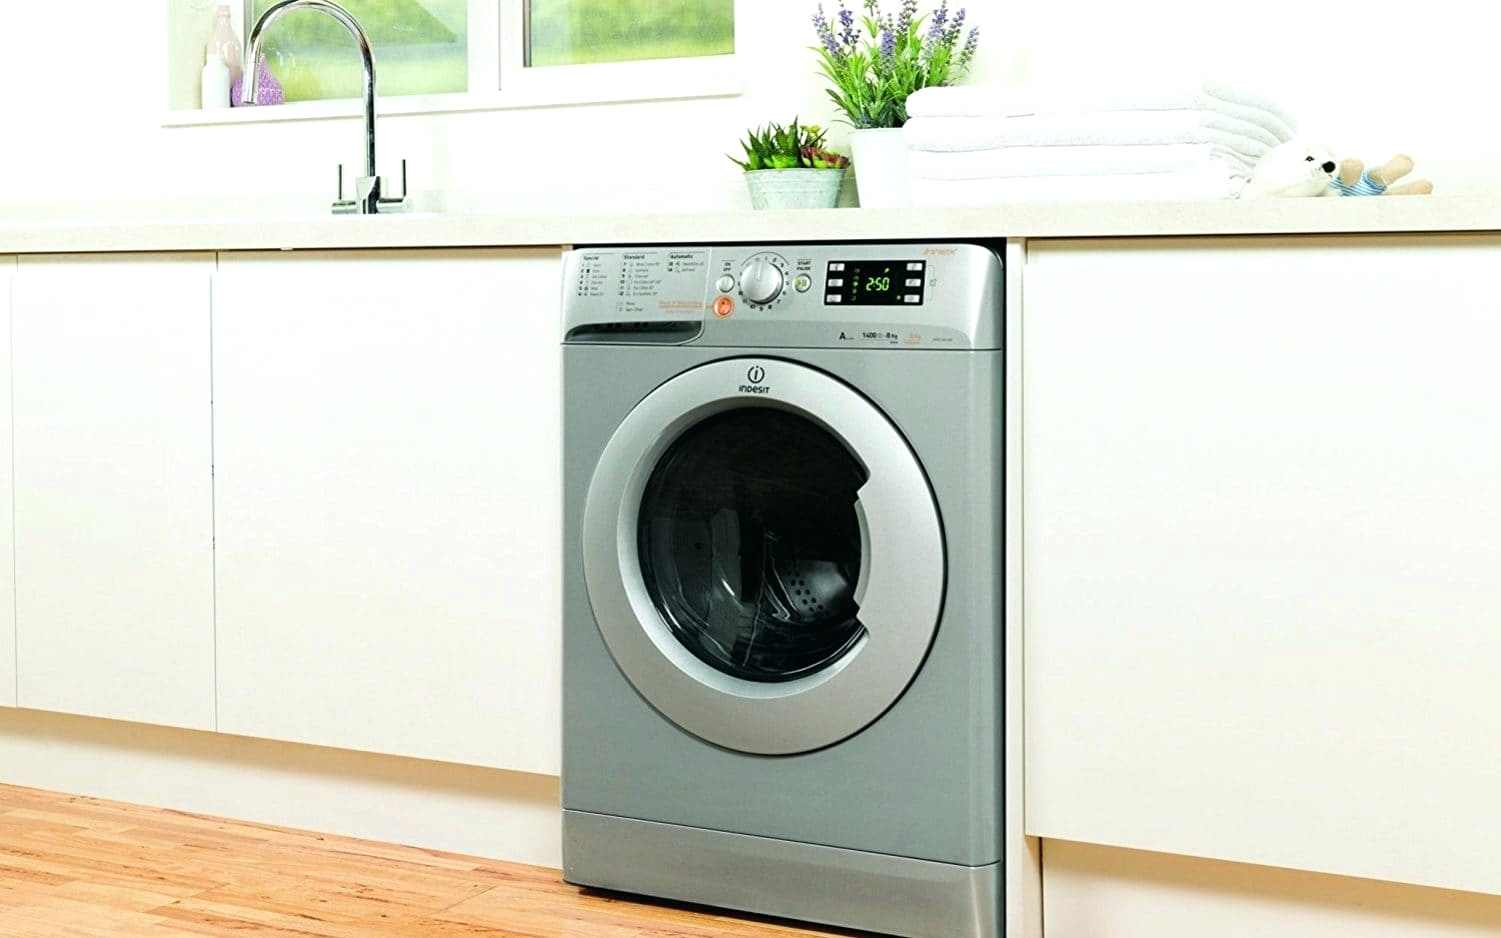 Washer. Bosch integrated Washer Dryer. 9kg… - Washers and Dryers uk. Красивая стиральная машинка. Встраиваемая в стену стиральная машина.